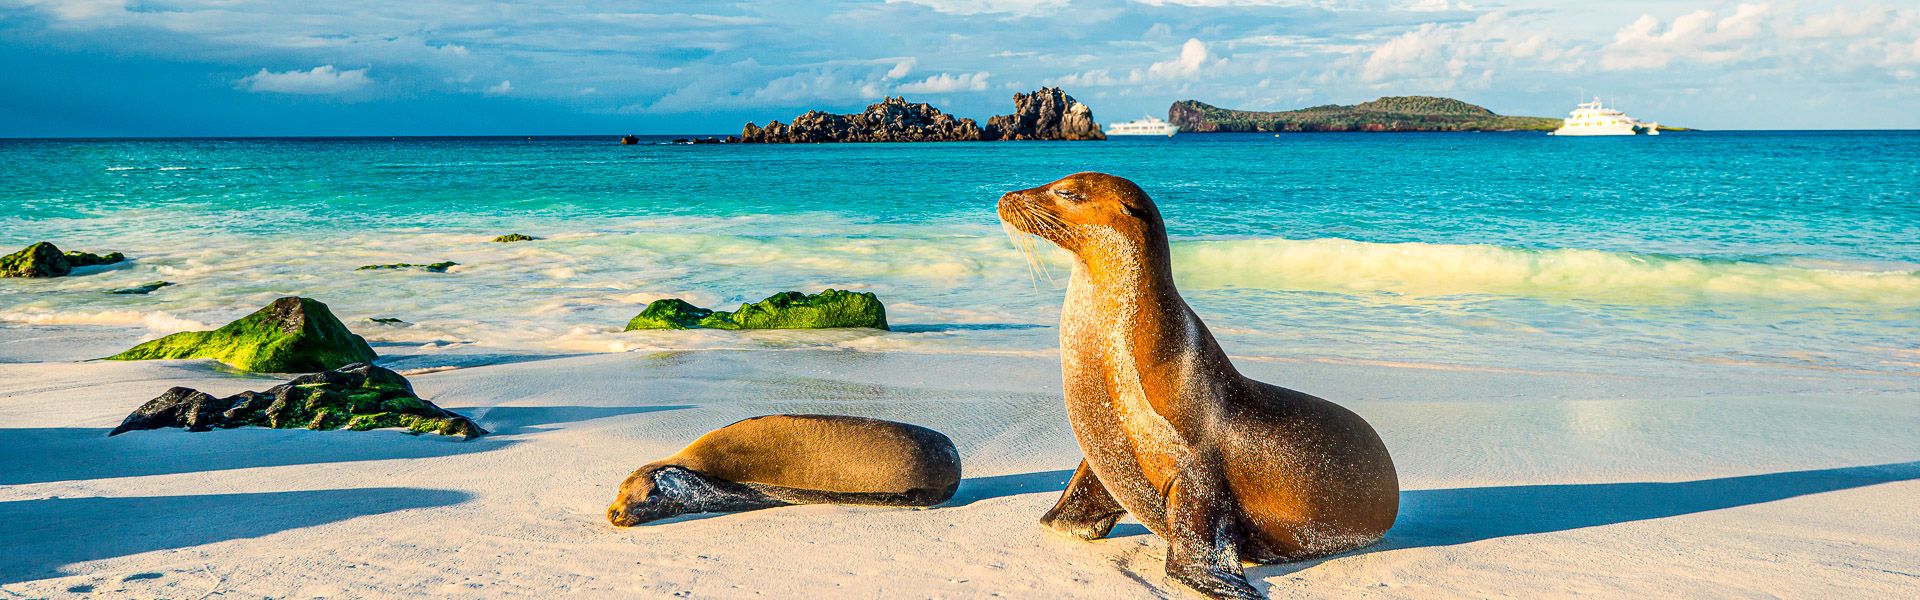 Seelwen am Strand der Insel Espanola, Galapagos  |  guenterguni, iStockphoto.com / Chamleon